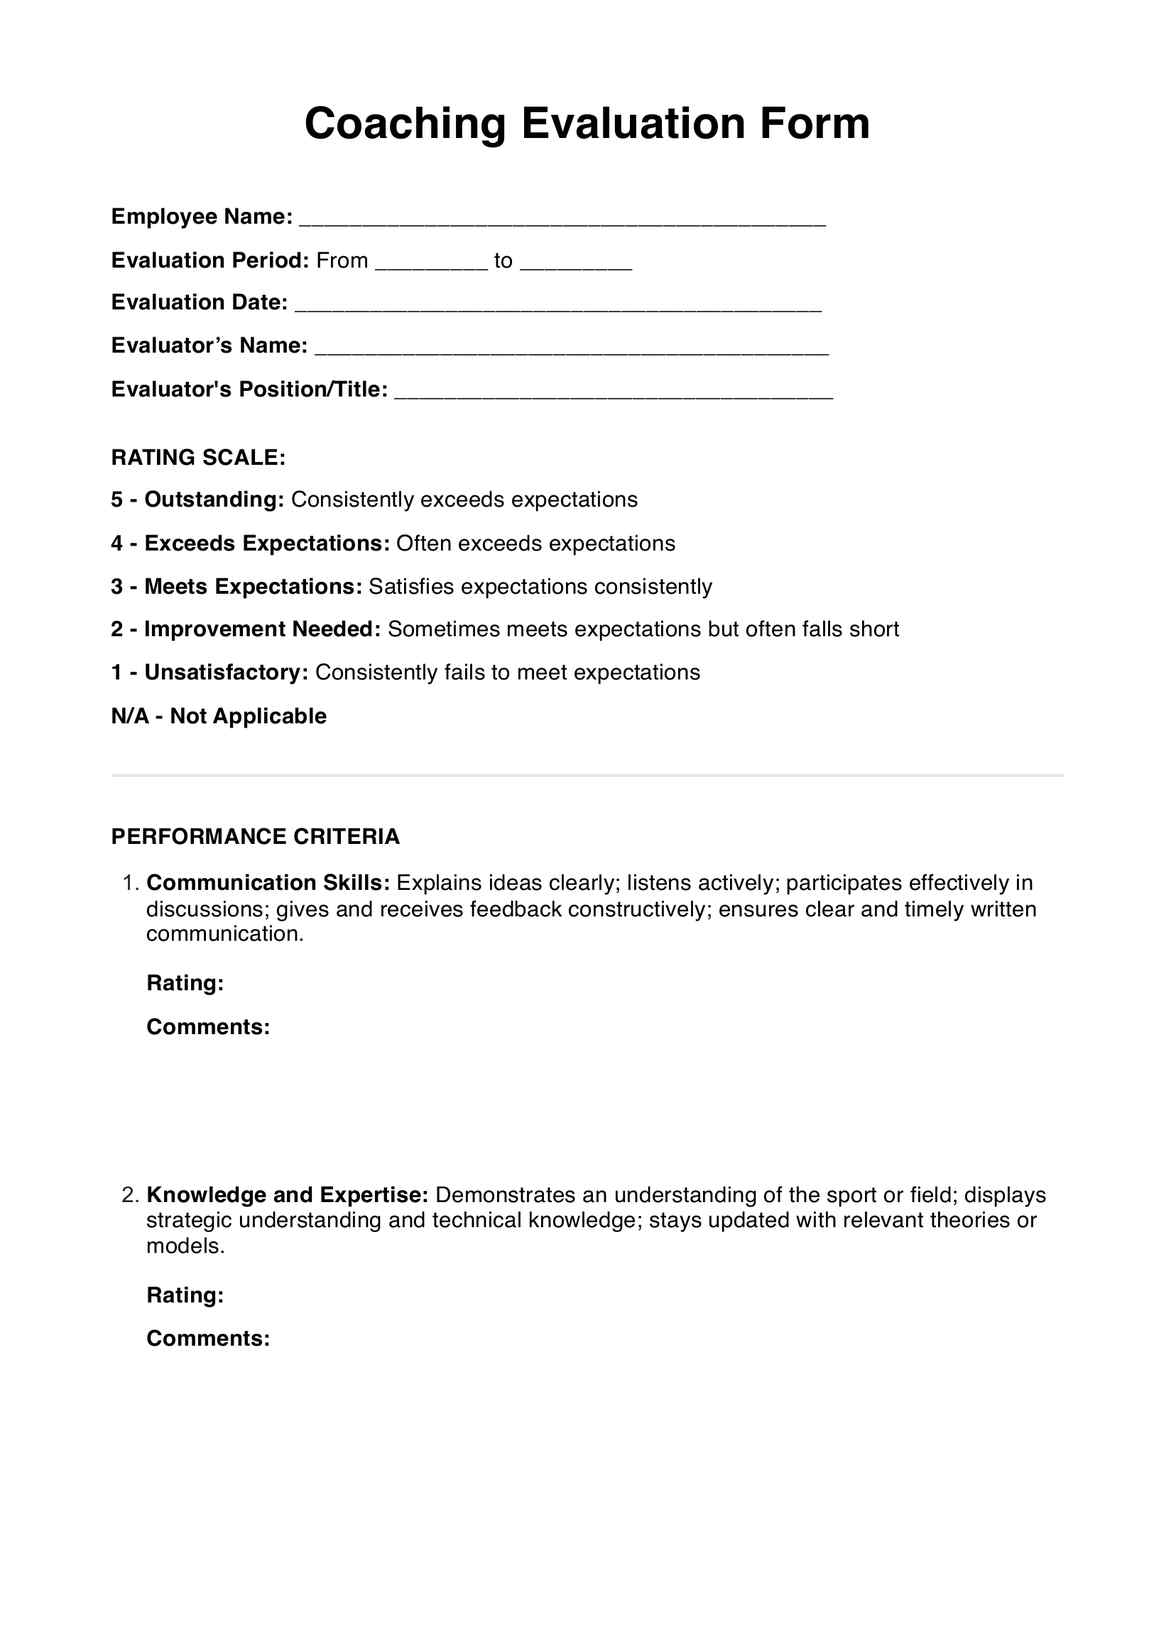 Coaching Evaluation Form PDF Example